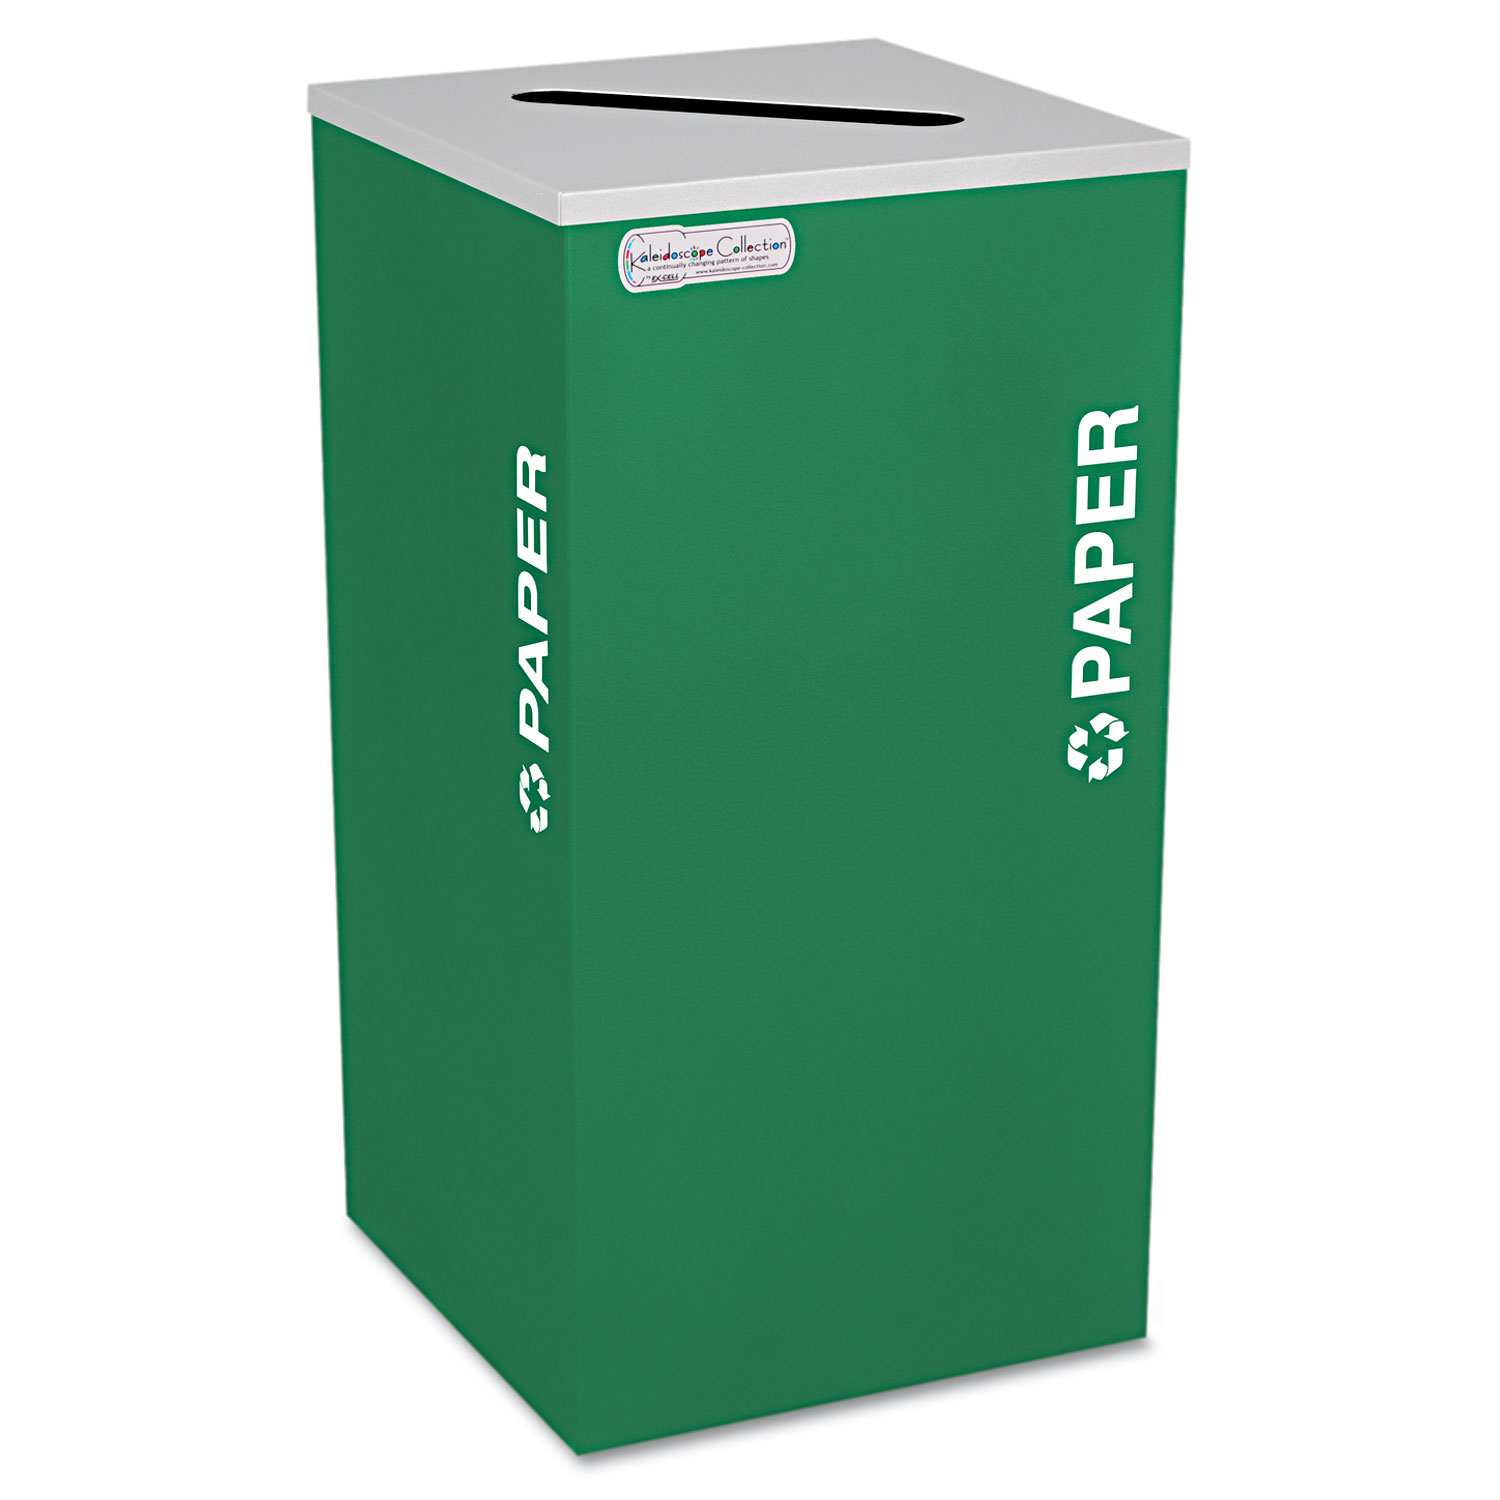  Ex-Cell RC-KDSQ-P EGX Kaleidoscope Collection Paper-Recycling Receptacle, 24 gal, Emerald Green (EXCRCKDSQPEGX) 